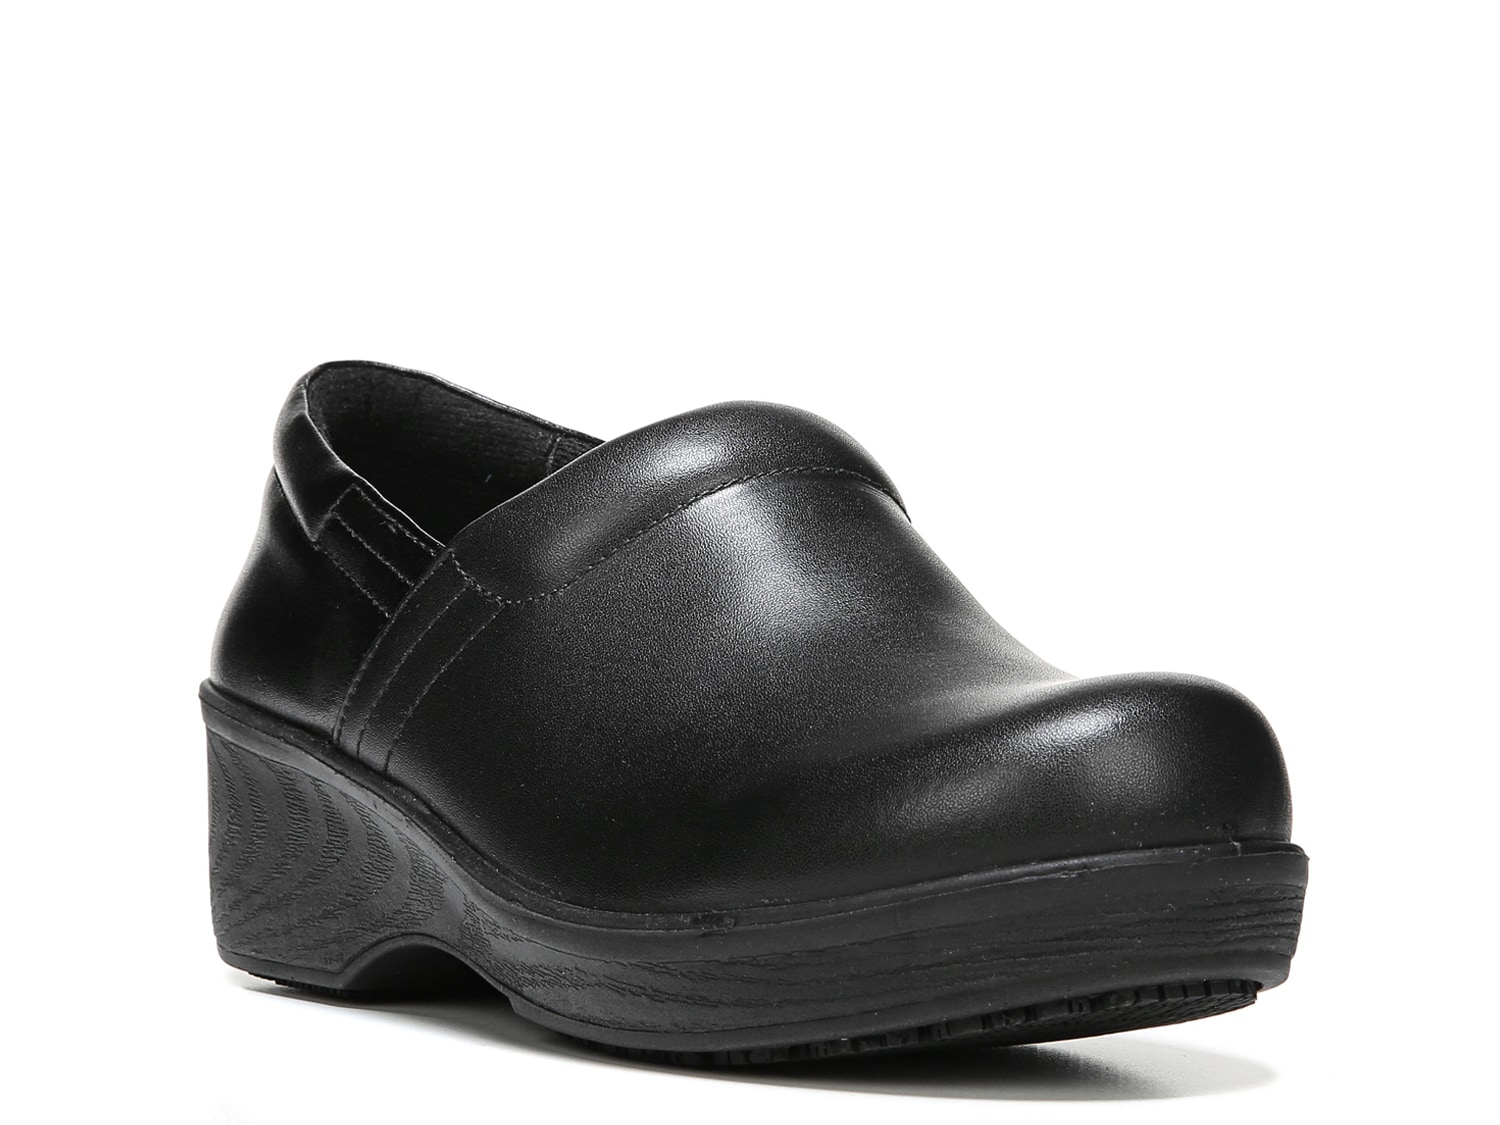 dsw slip resistant work shoes